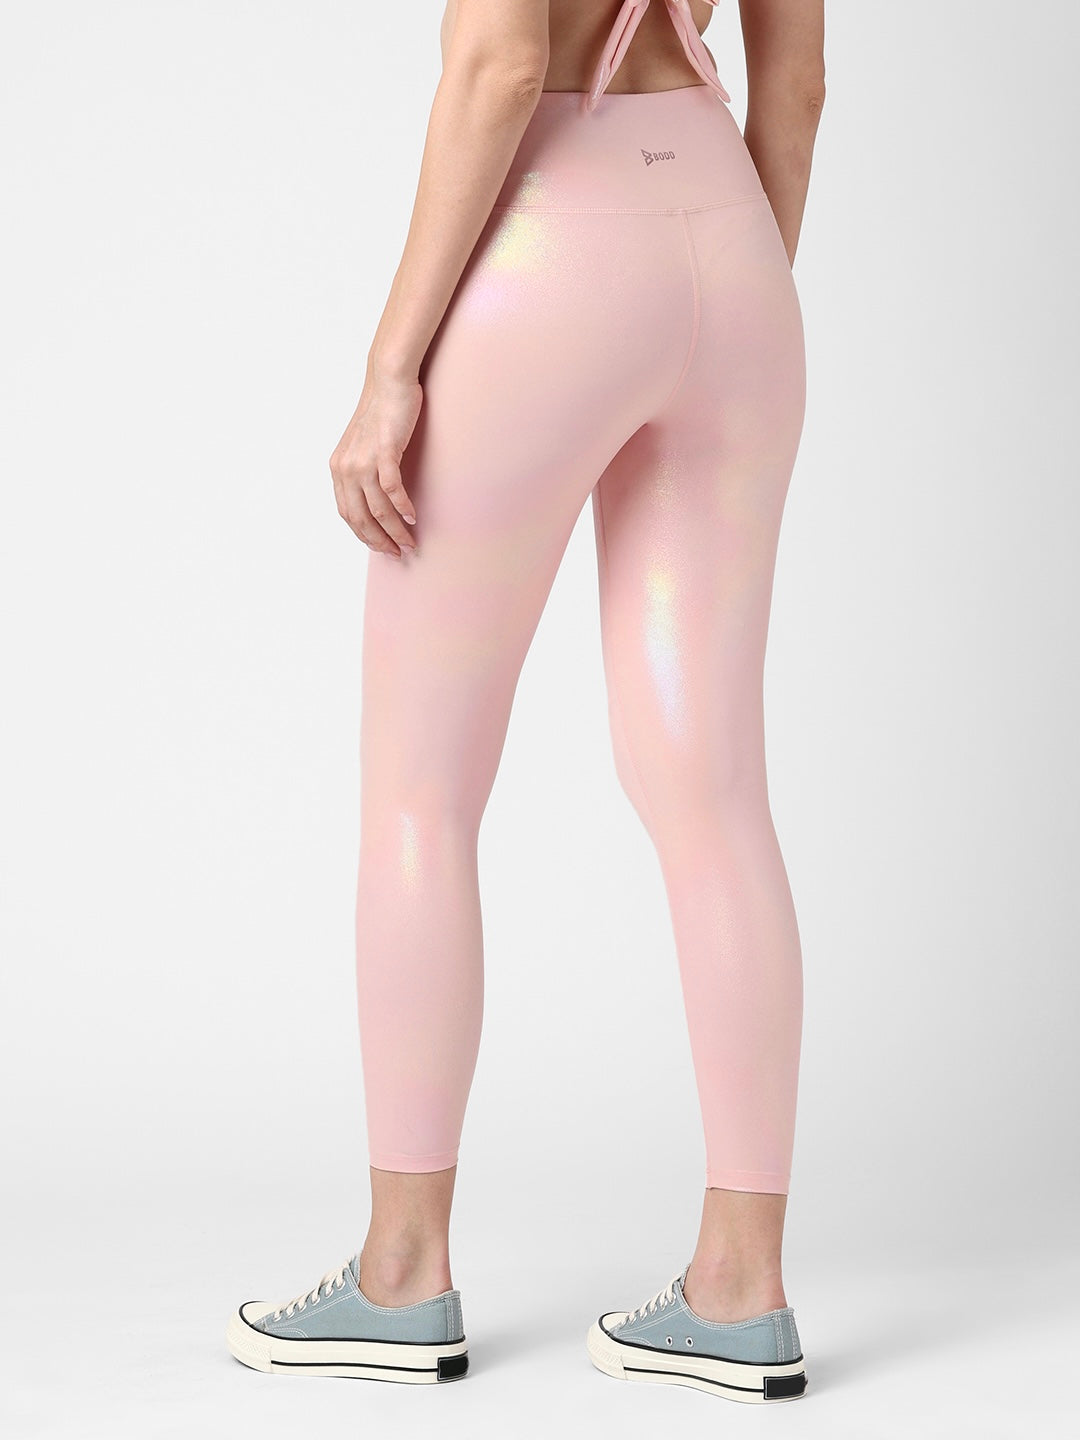 Peachy Pink Holo Leggings boddactive.com